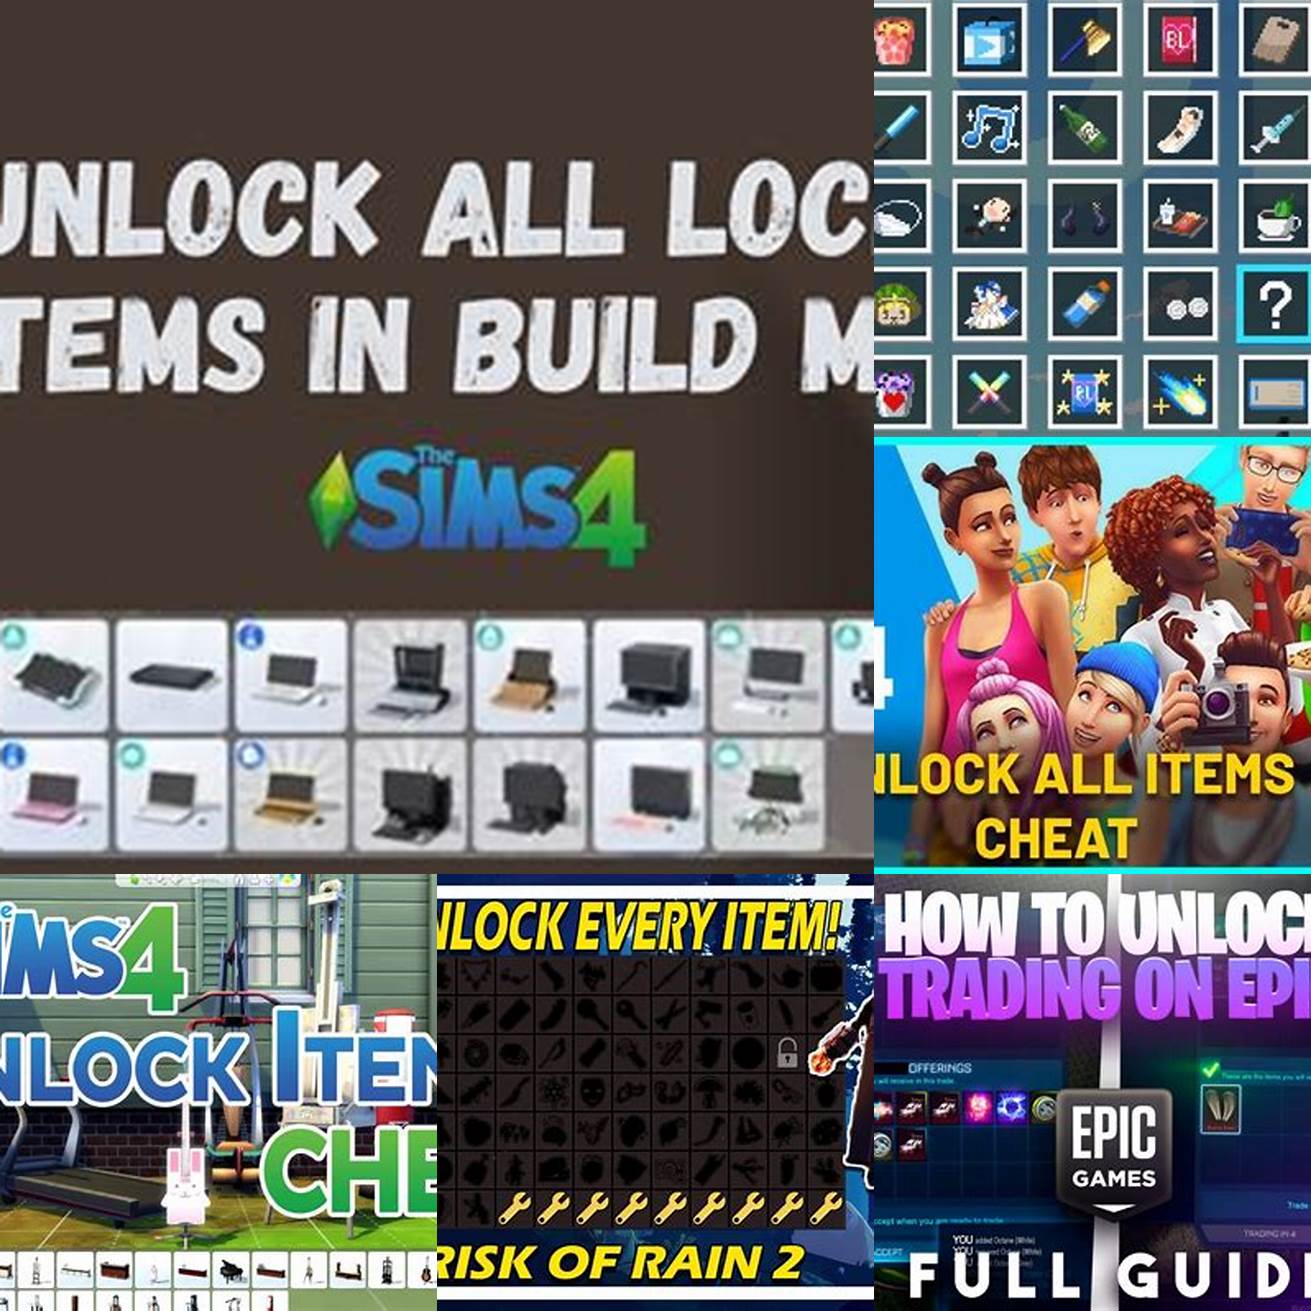 Unlock All Items Semua item dalam game akan terbuka termasuk mode permainan baru dan karakter yang lebih kuat